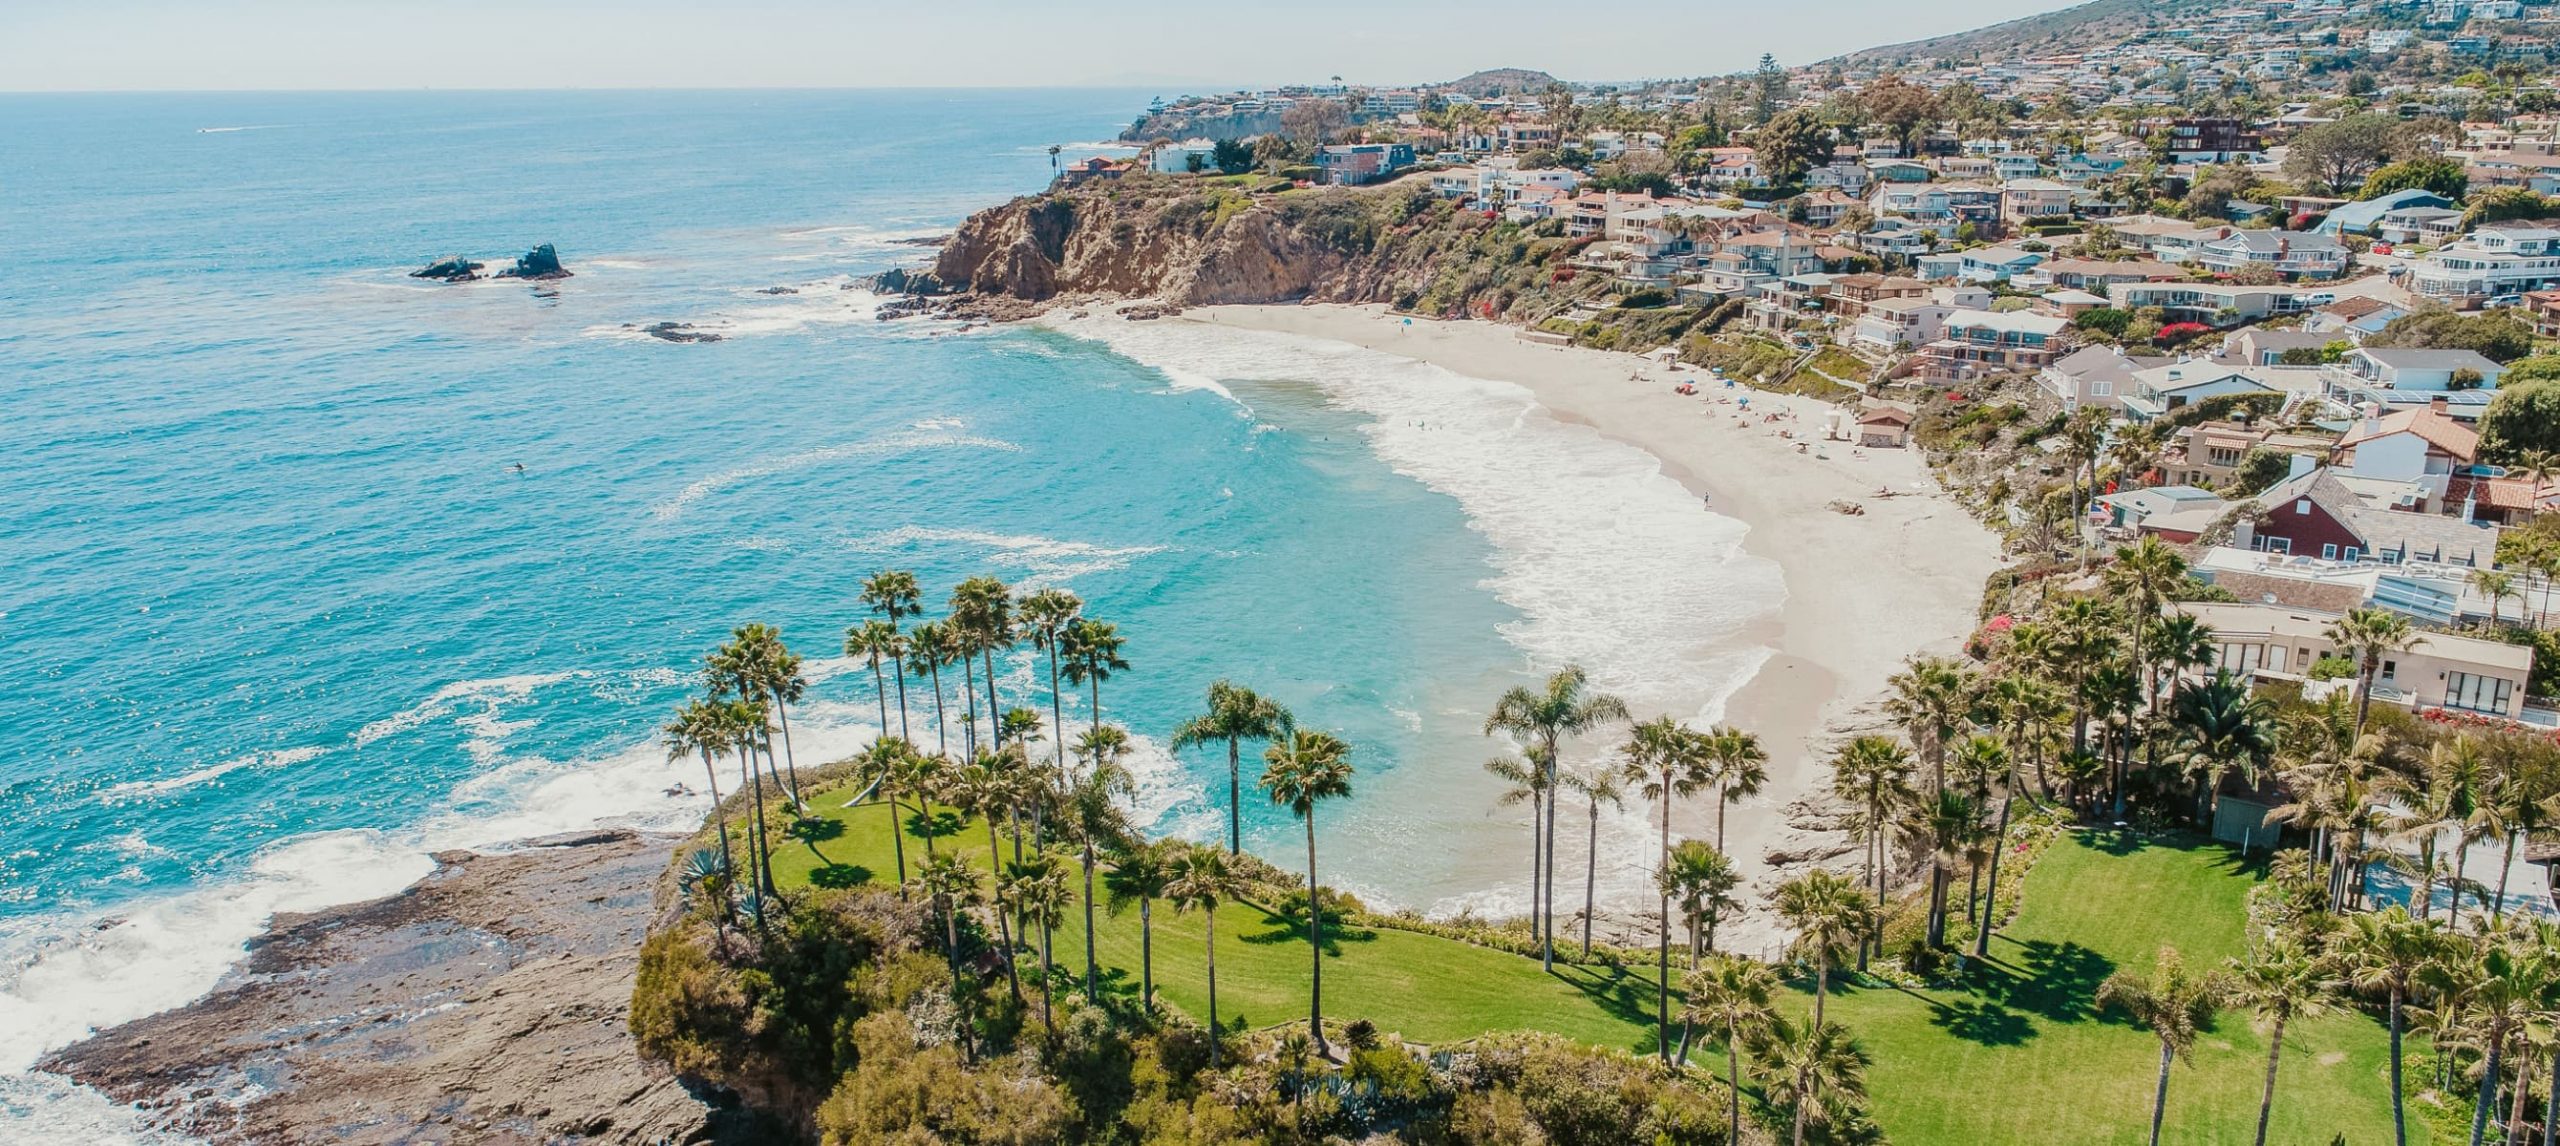 Top view of Laguna Beach, in California.